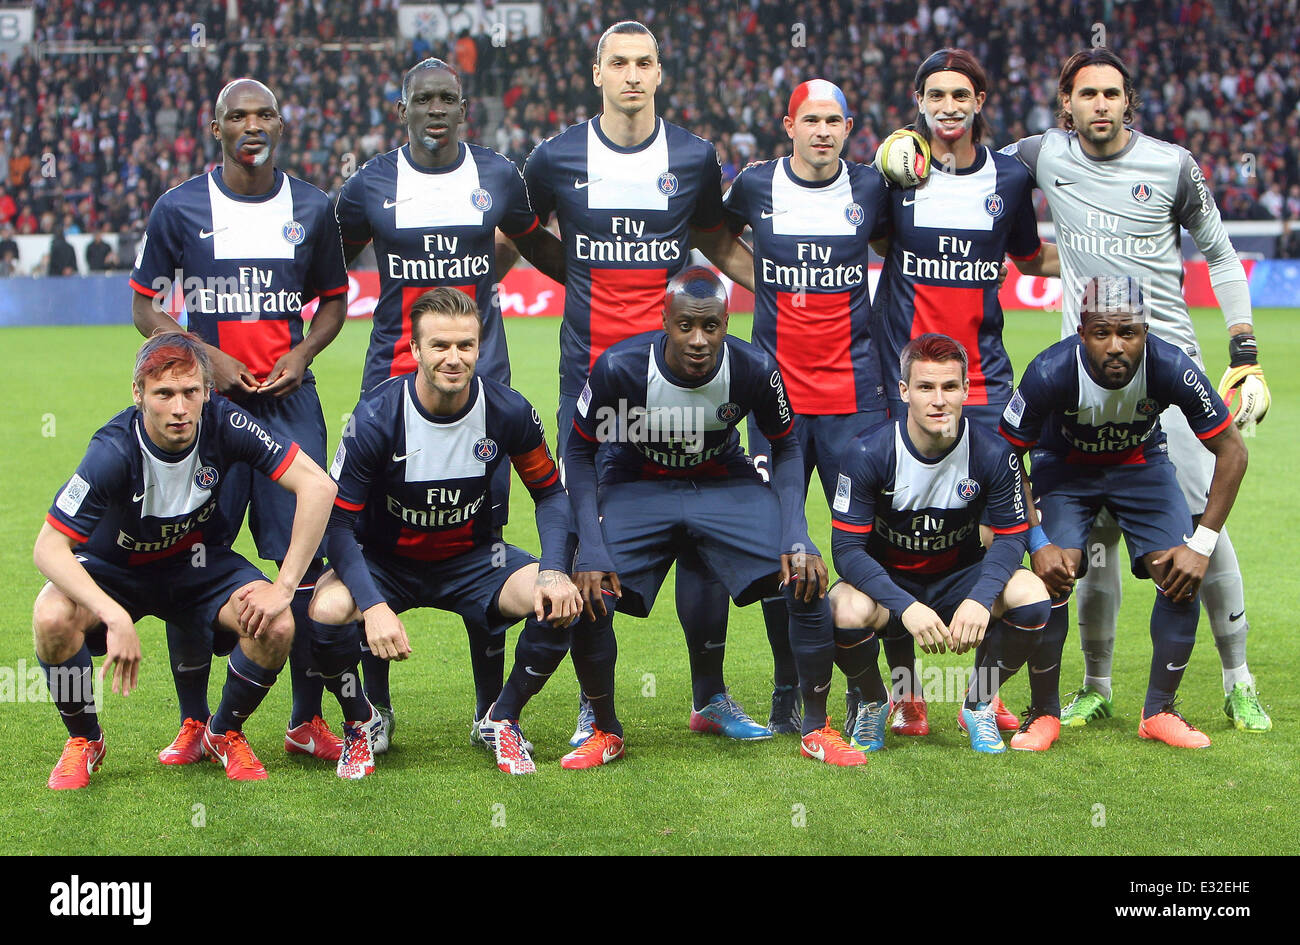 David Beckham plays his last match before retirement with Paris St